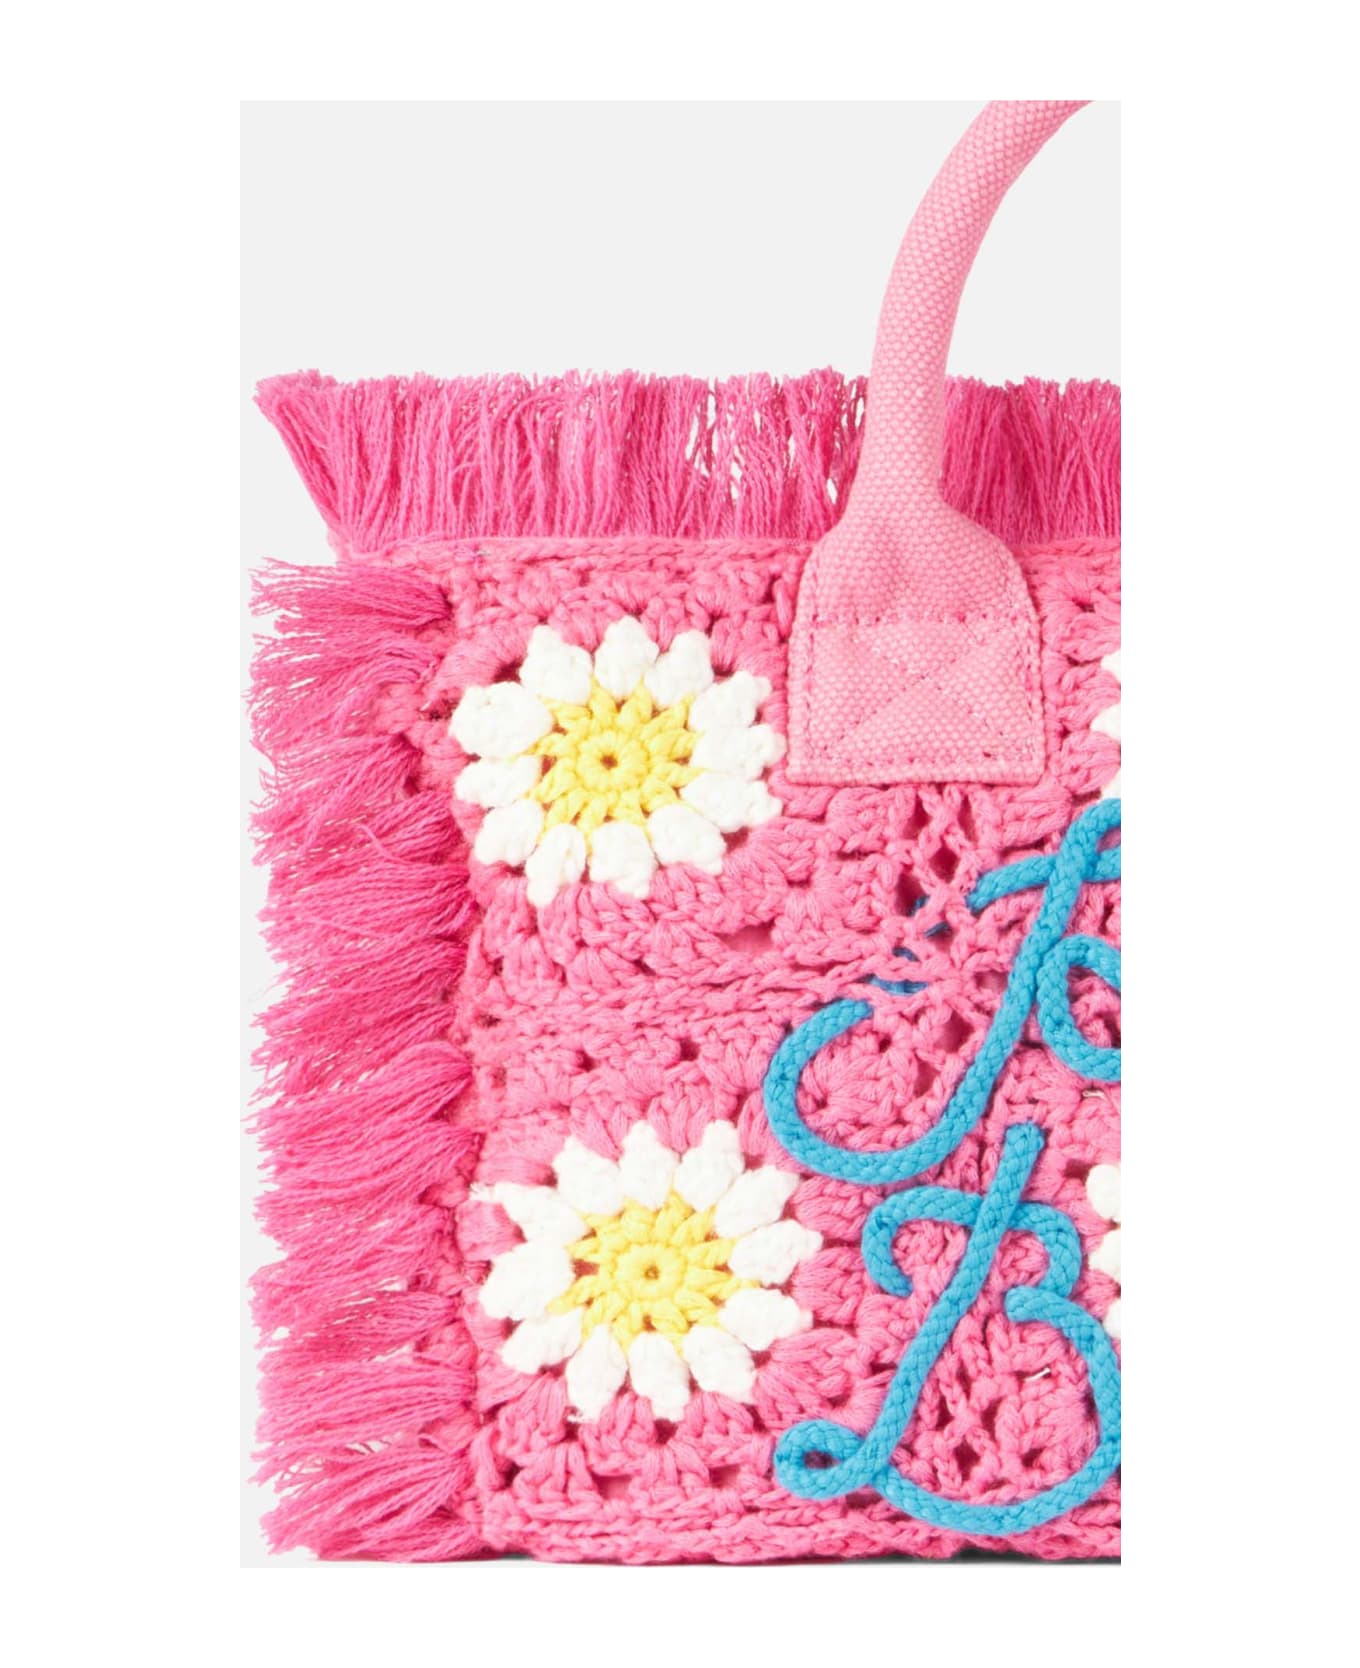 MC2 Saint Barth Colette Handbag With Crochet Flower Patches - PINK